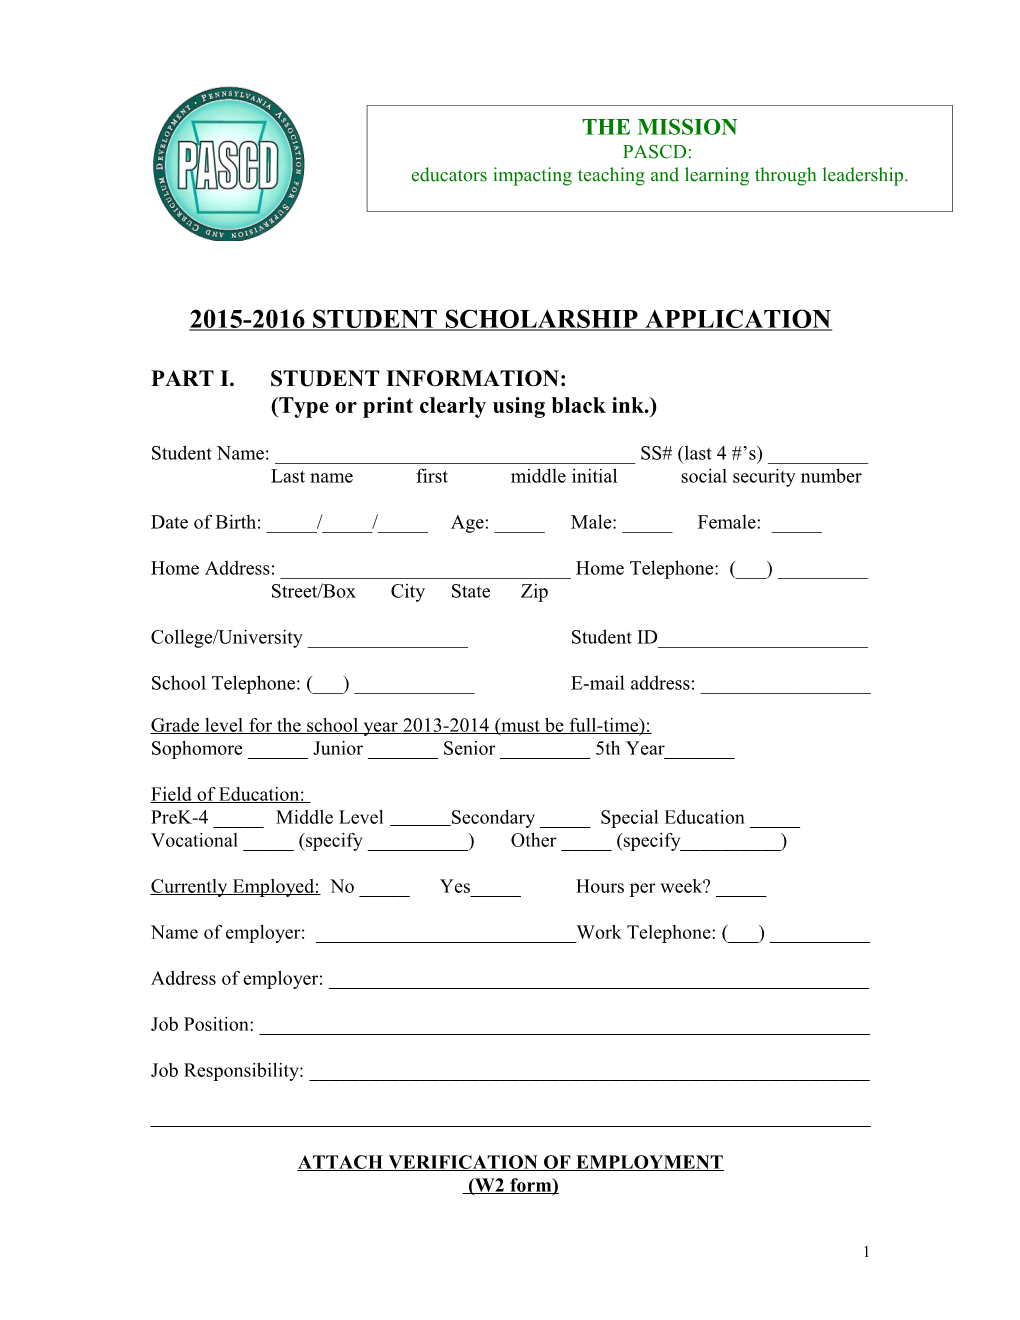 2015-2016 Student Scholarship Application